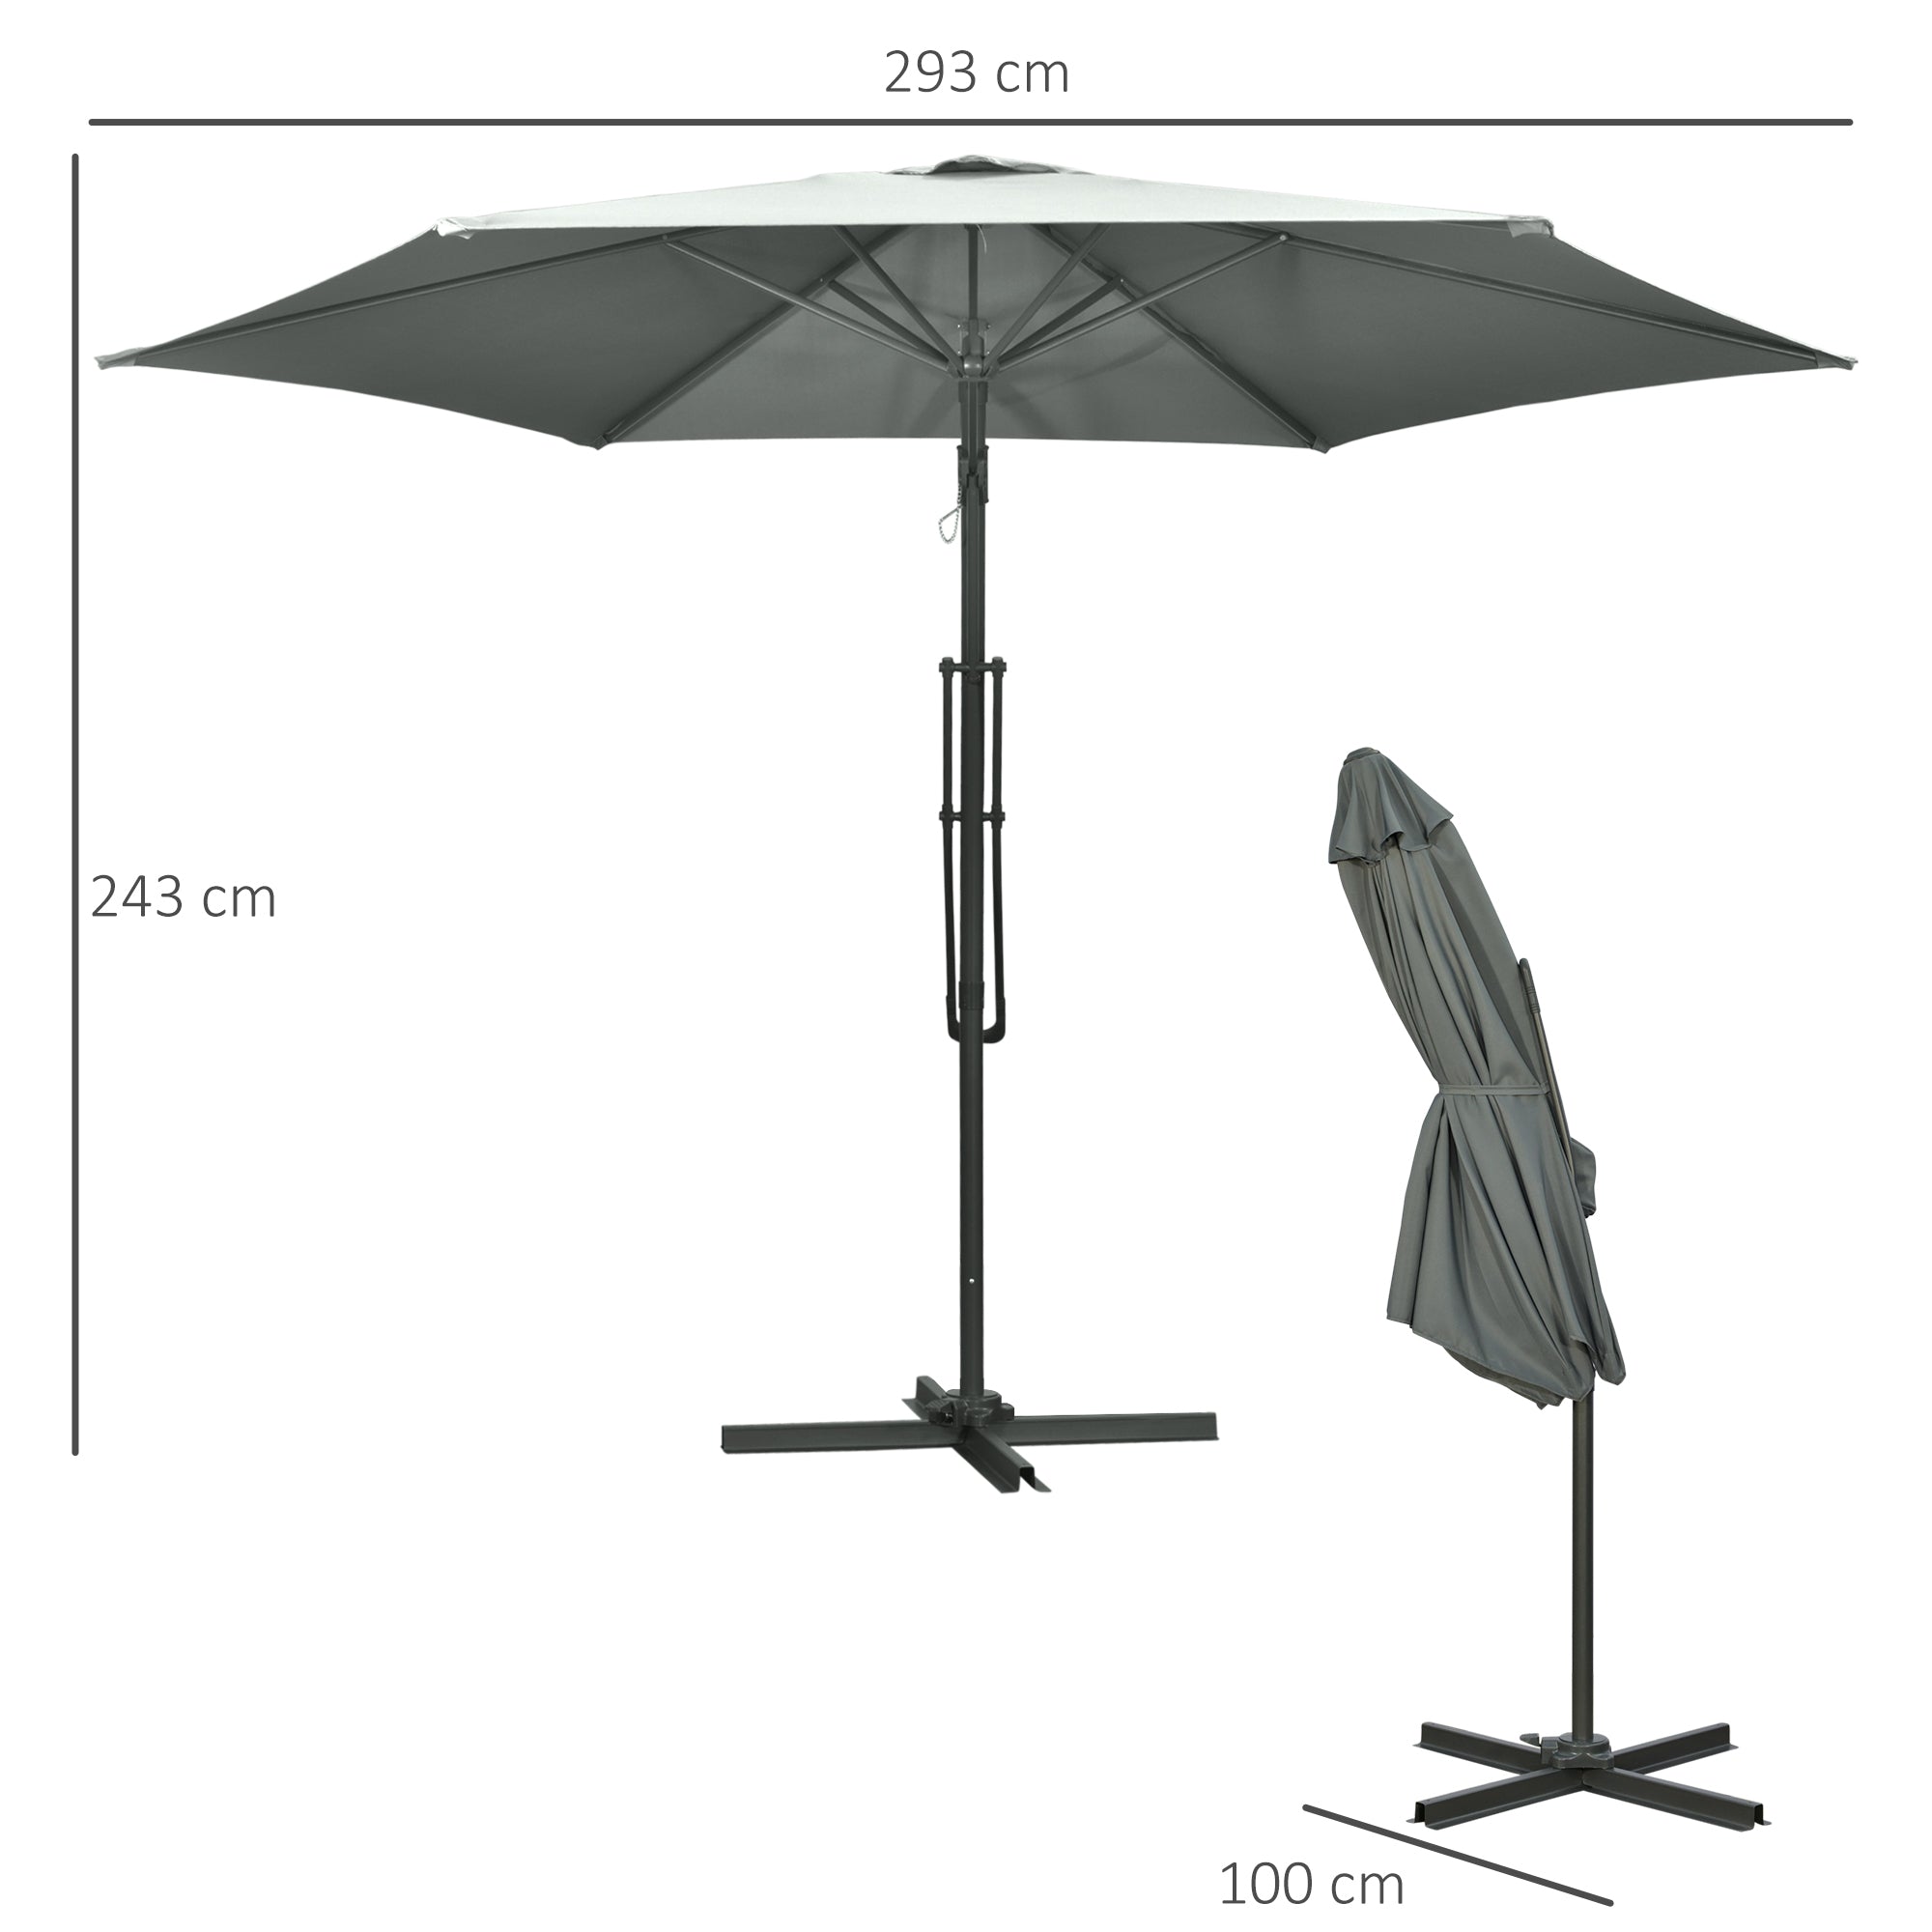 3m Cantilever Parasol with Easy Lever, Patio Umbrella with Crank Handle, Cross Base and 6 Metal Ribs, Outdoor Sun Shades for Garden, Grey-2